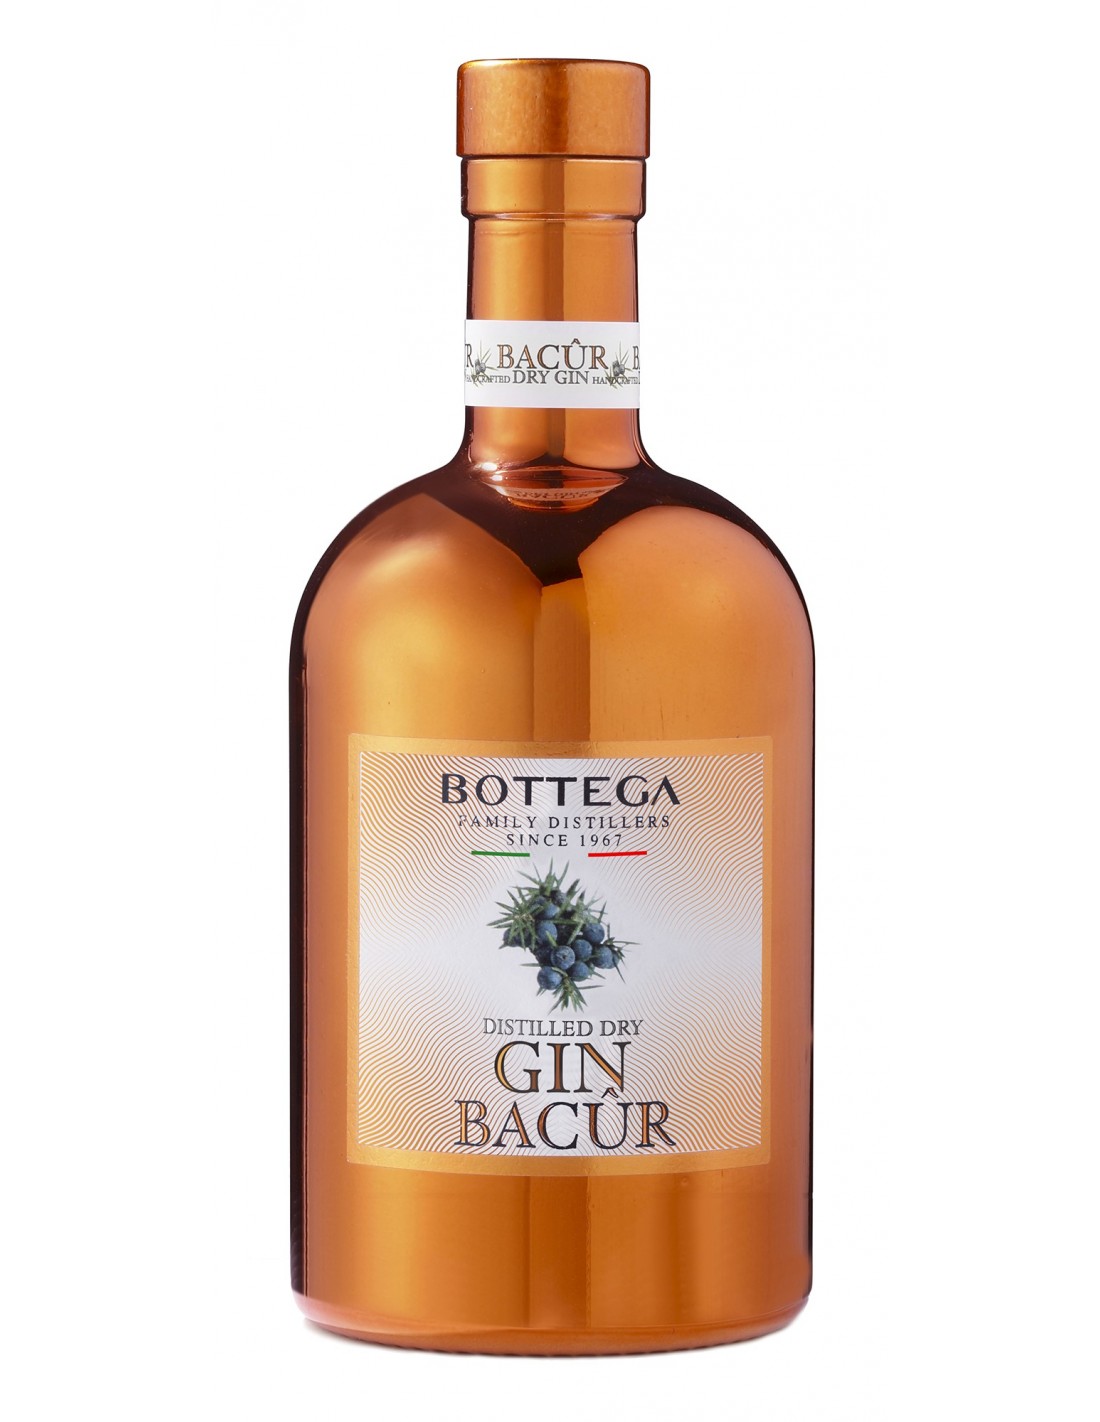 Gin Bottega Bacur, 40% alc., 0.7L, Italia alcooldiscount.ro